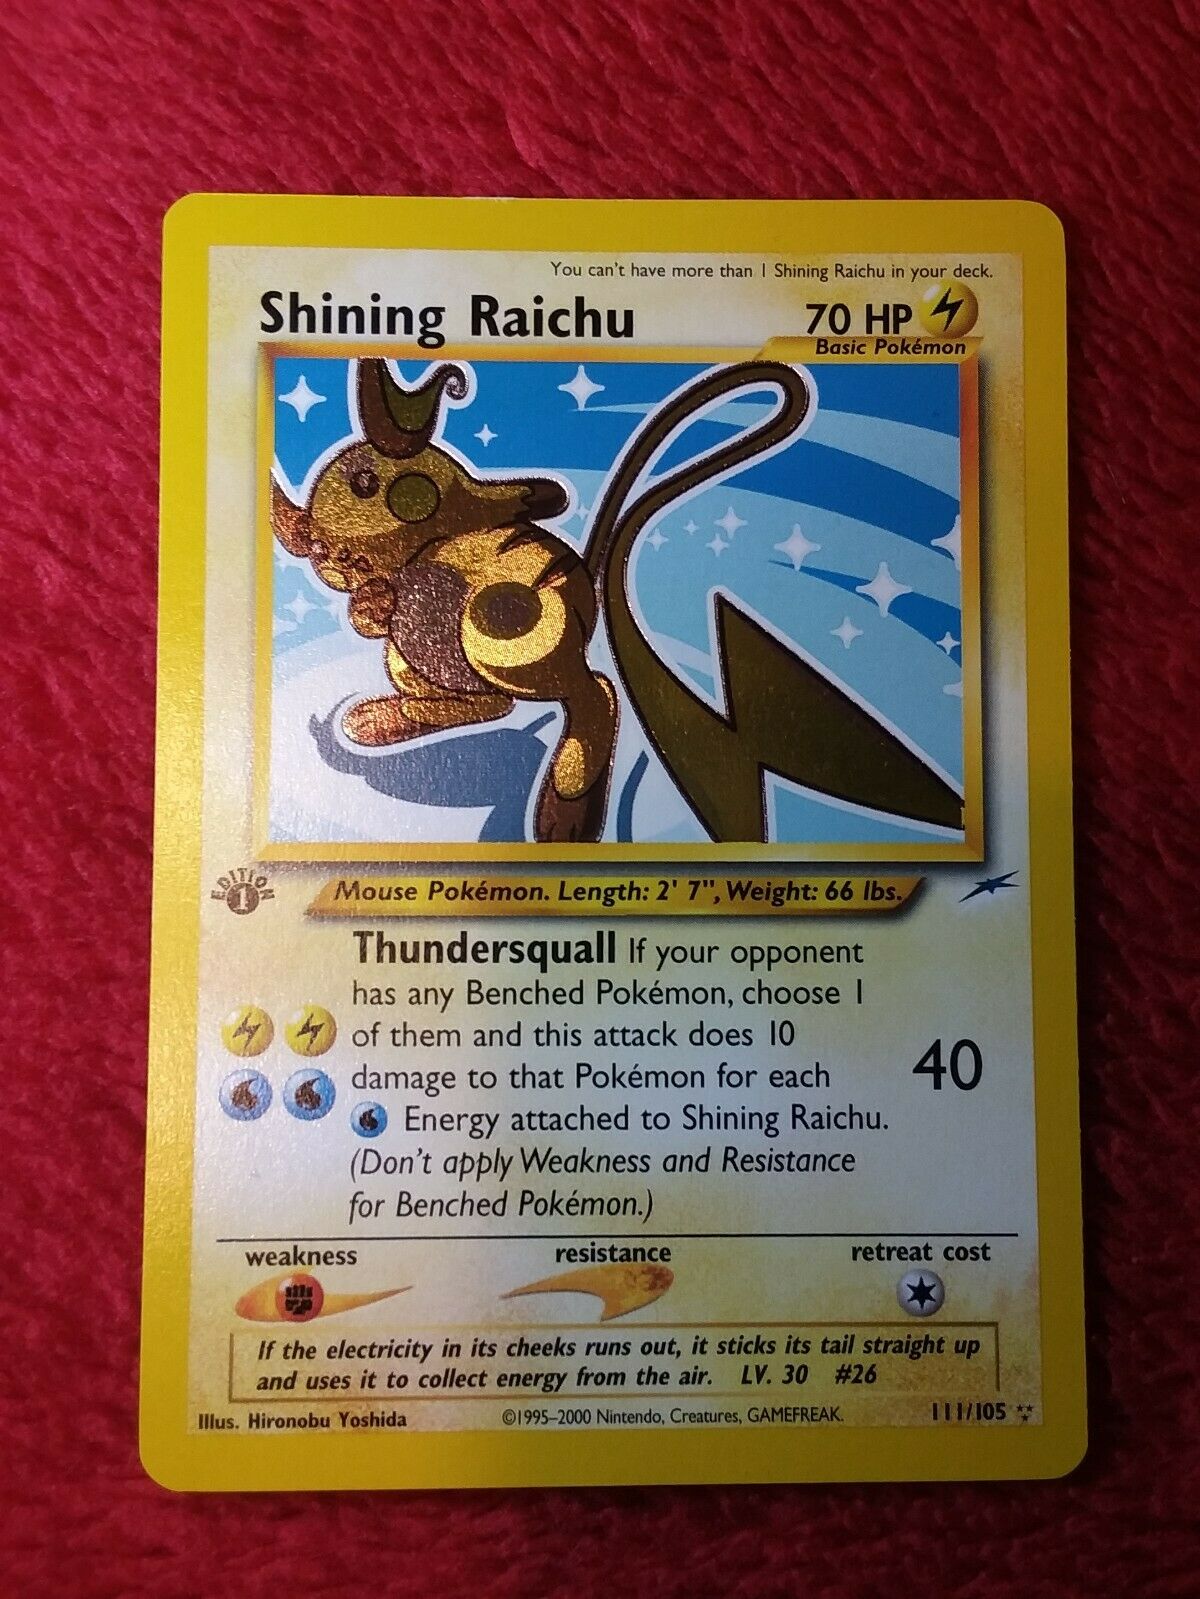 Super rare 1st edition holographic shining raichu pokemon card Great condition